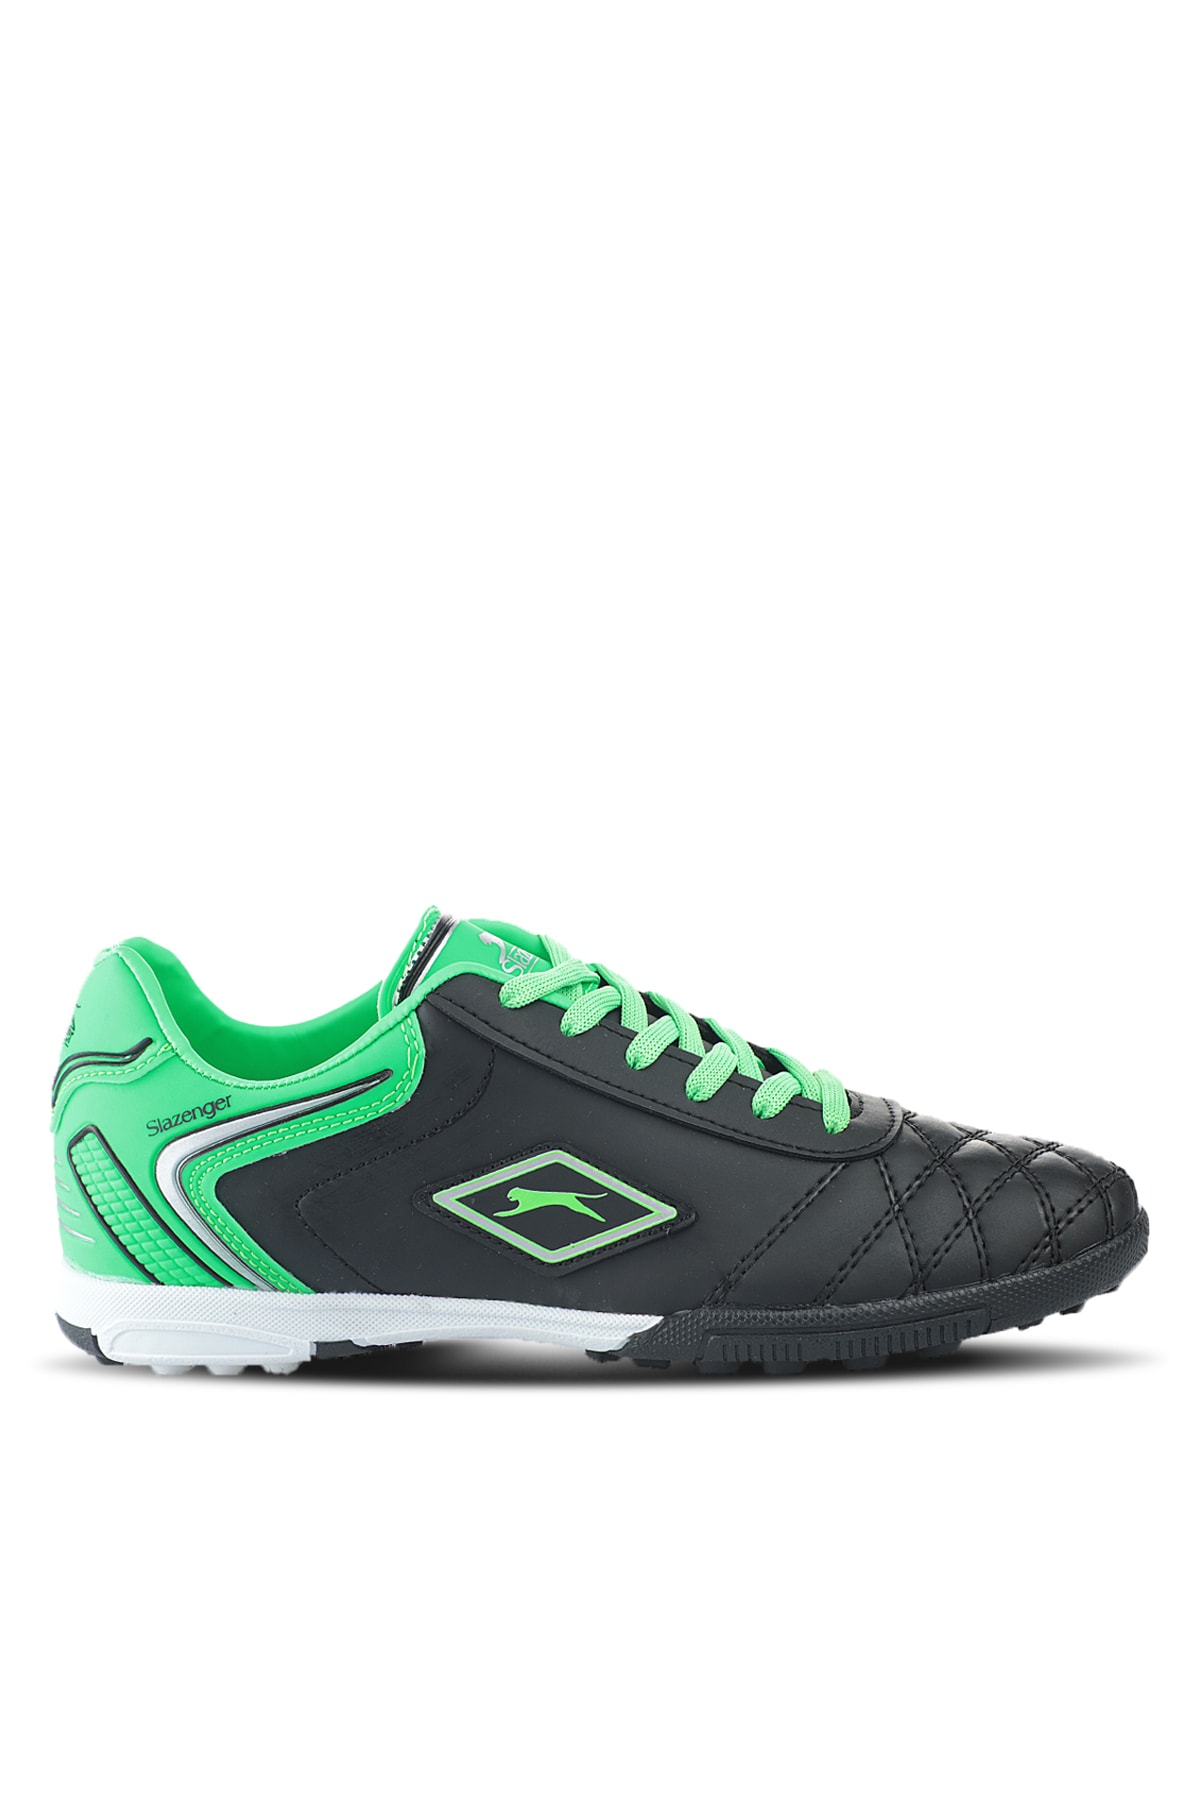 Slazenger Hugo Astroturf Football Men's Cleats Shoes Black / Green